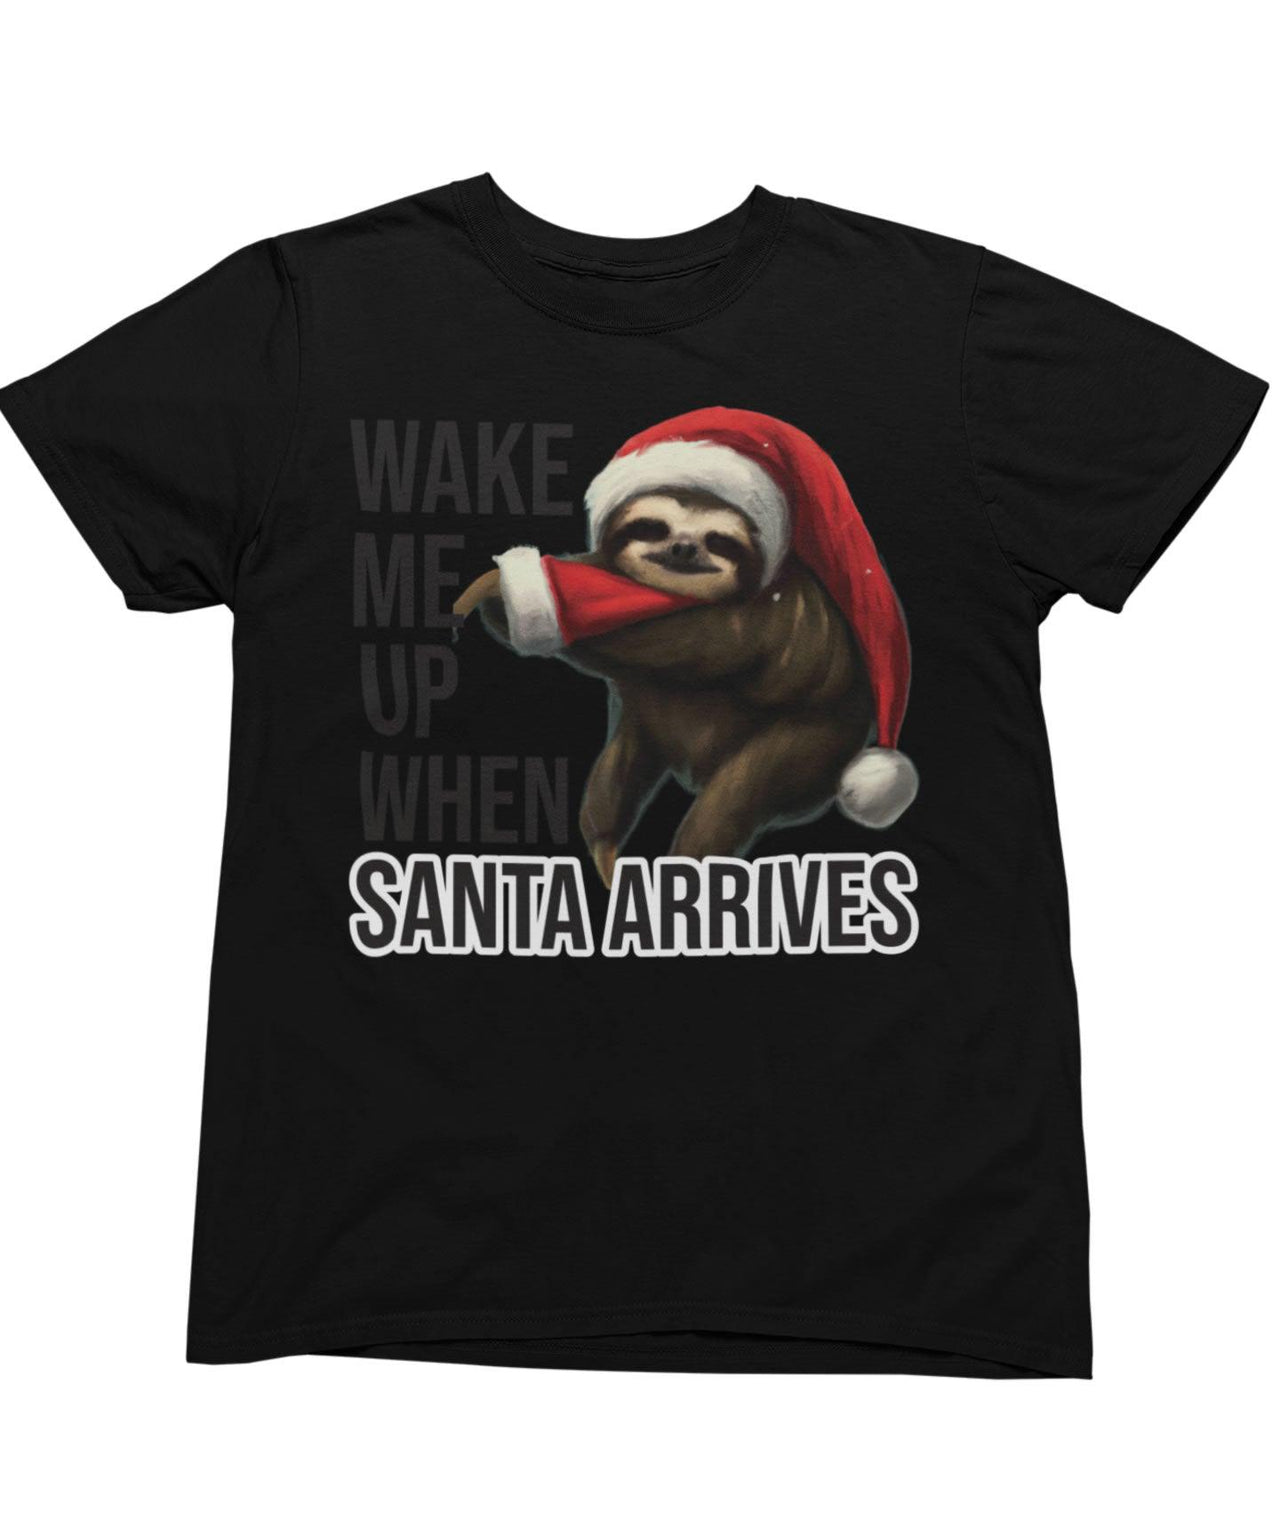 Sloth Wake Me Up When Santa Arrives Christmas Unisex Mens Graphic T-Shirt 8Ball